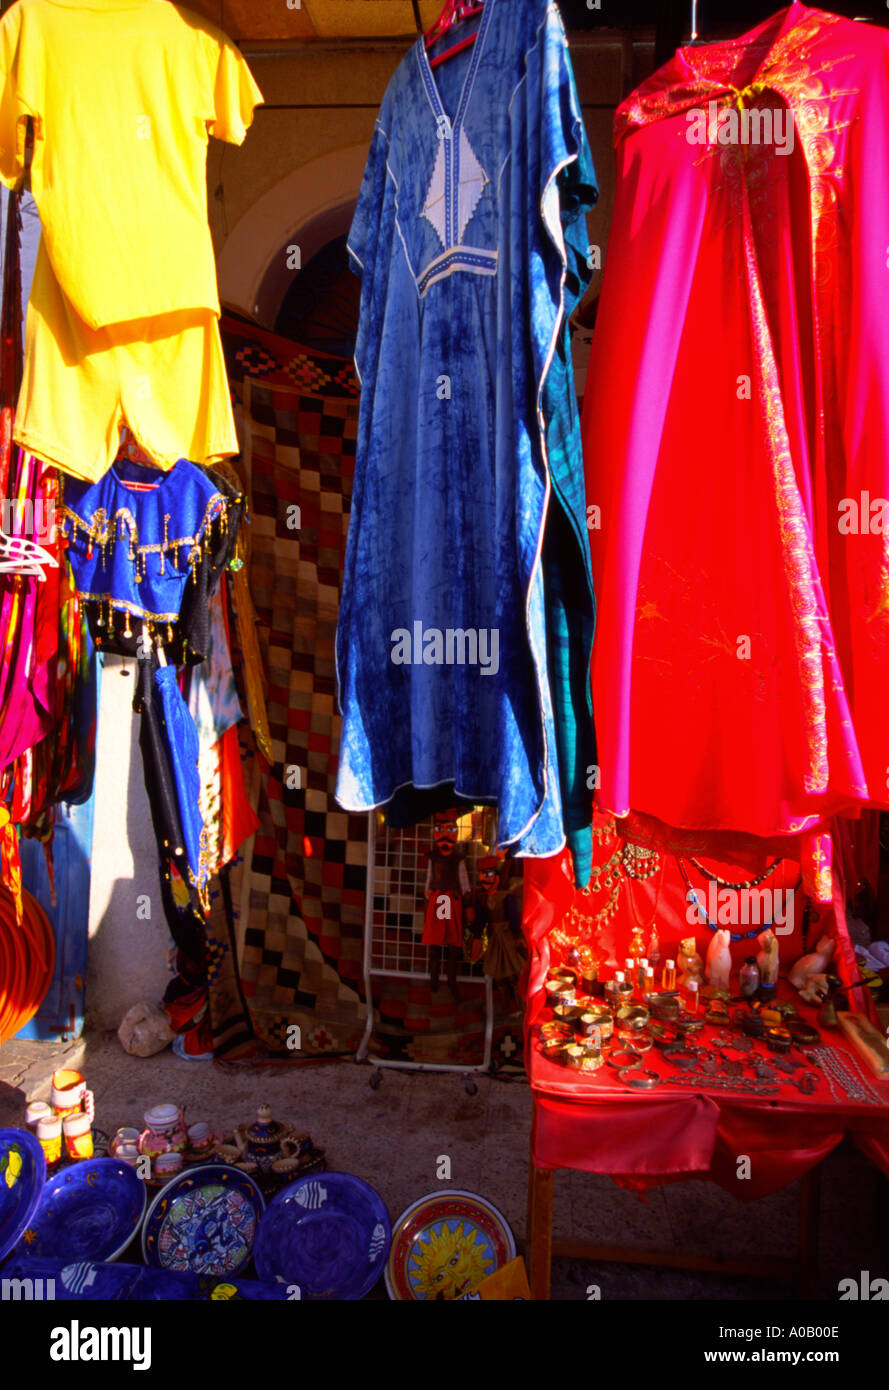 Outdoor store clothing display Tunisia 1141 Stock Photo